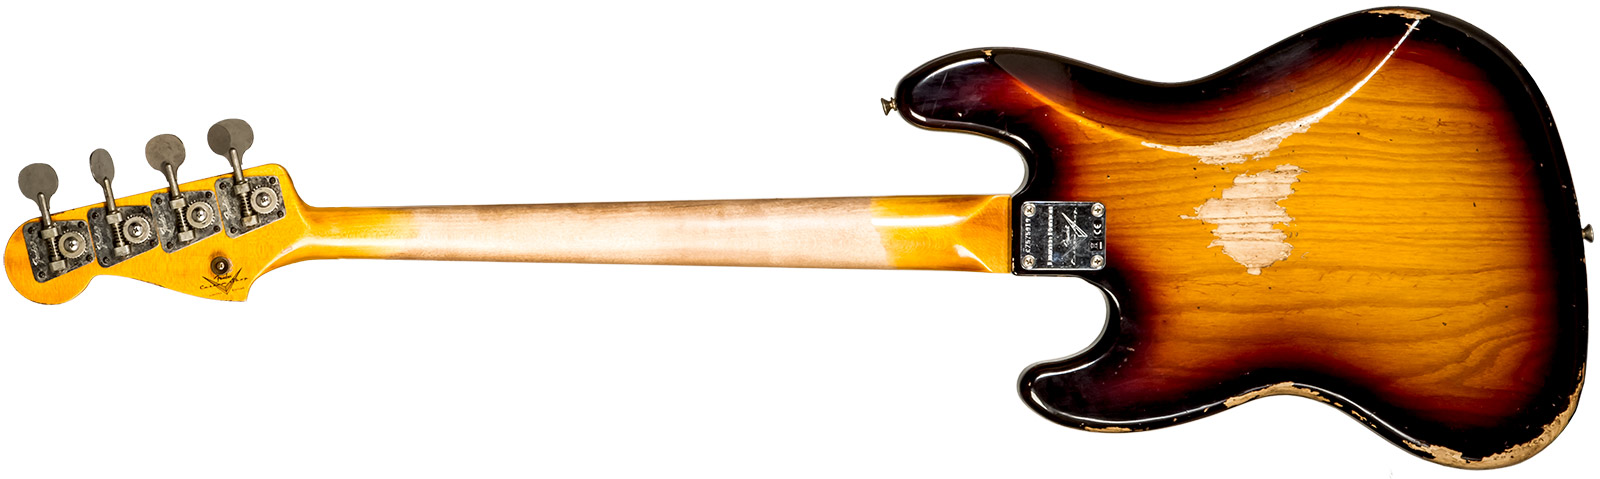 Fender Custom Shop Jazz Bass Custom Rw #cz575919 - Heavy Relic 3-color Sunburst - Solidbody E-bass - Variation 2